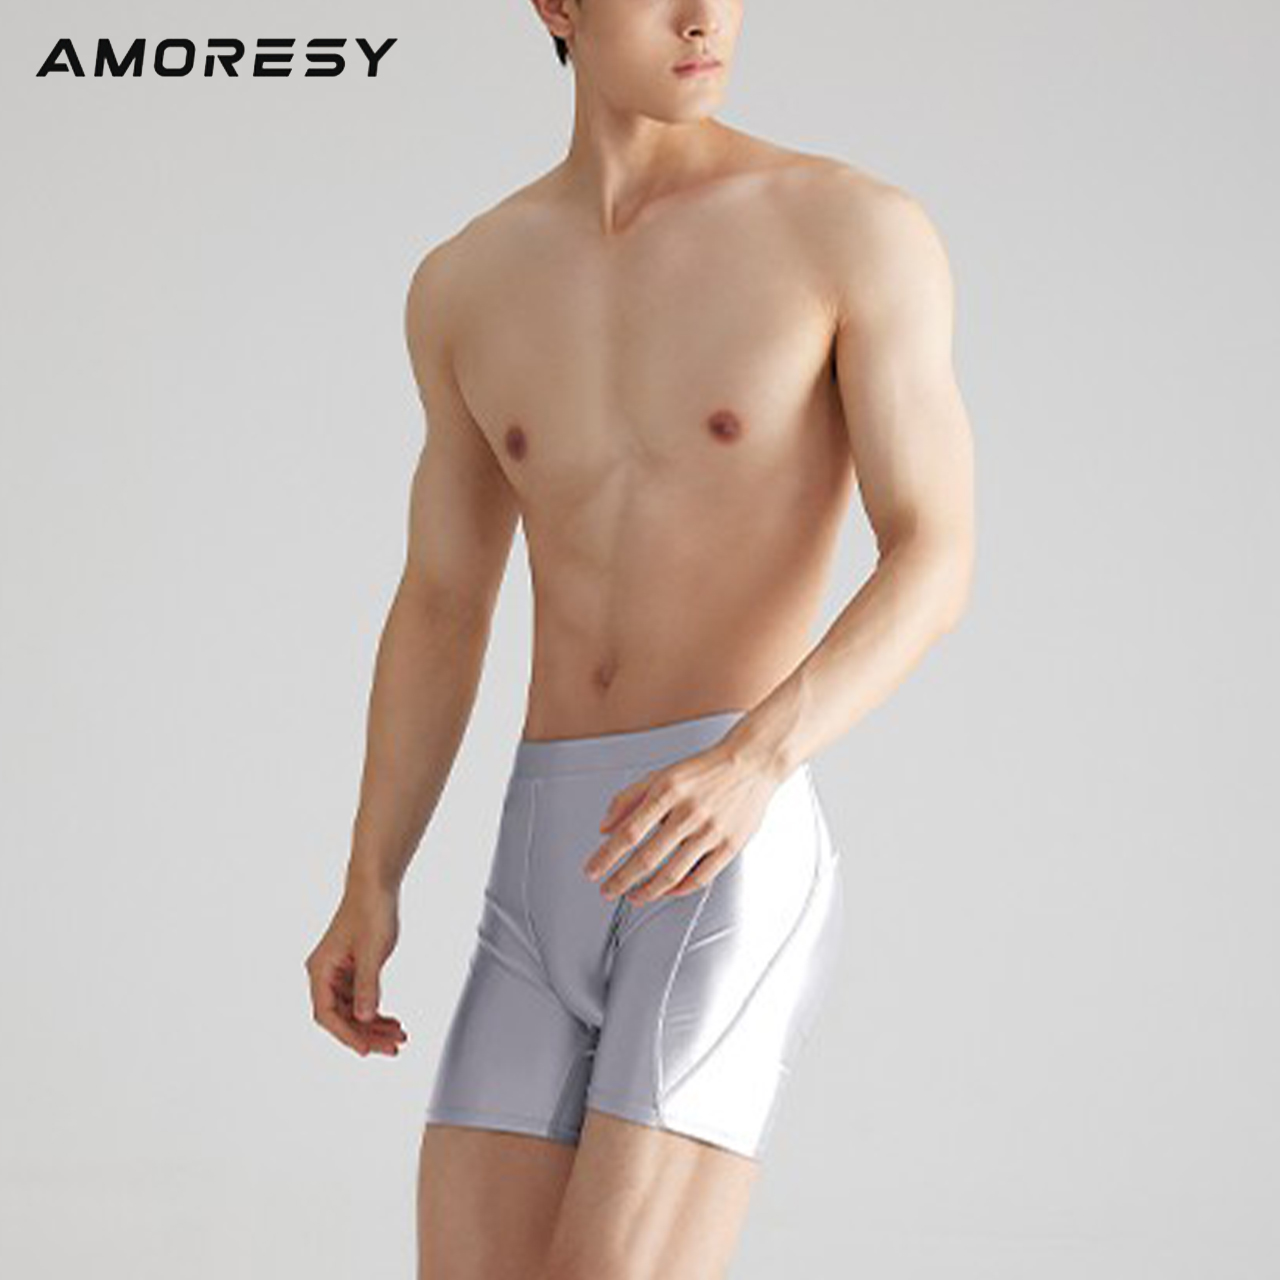 AMORESY Poseidon men's shorts base re year spats lustre pants supporter jo silver g Jim training for man 